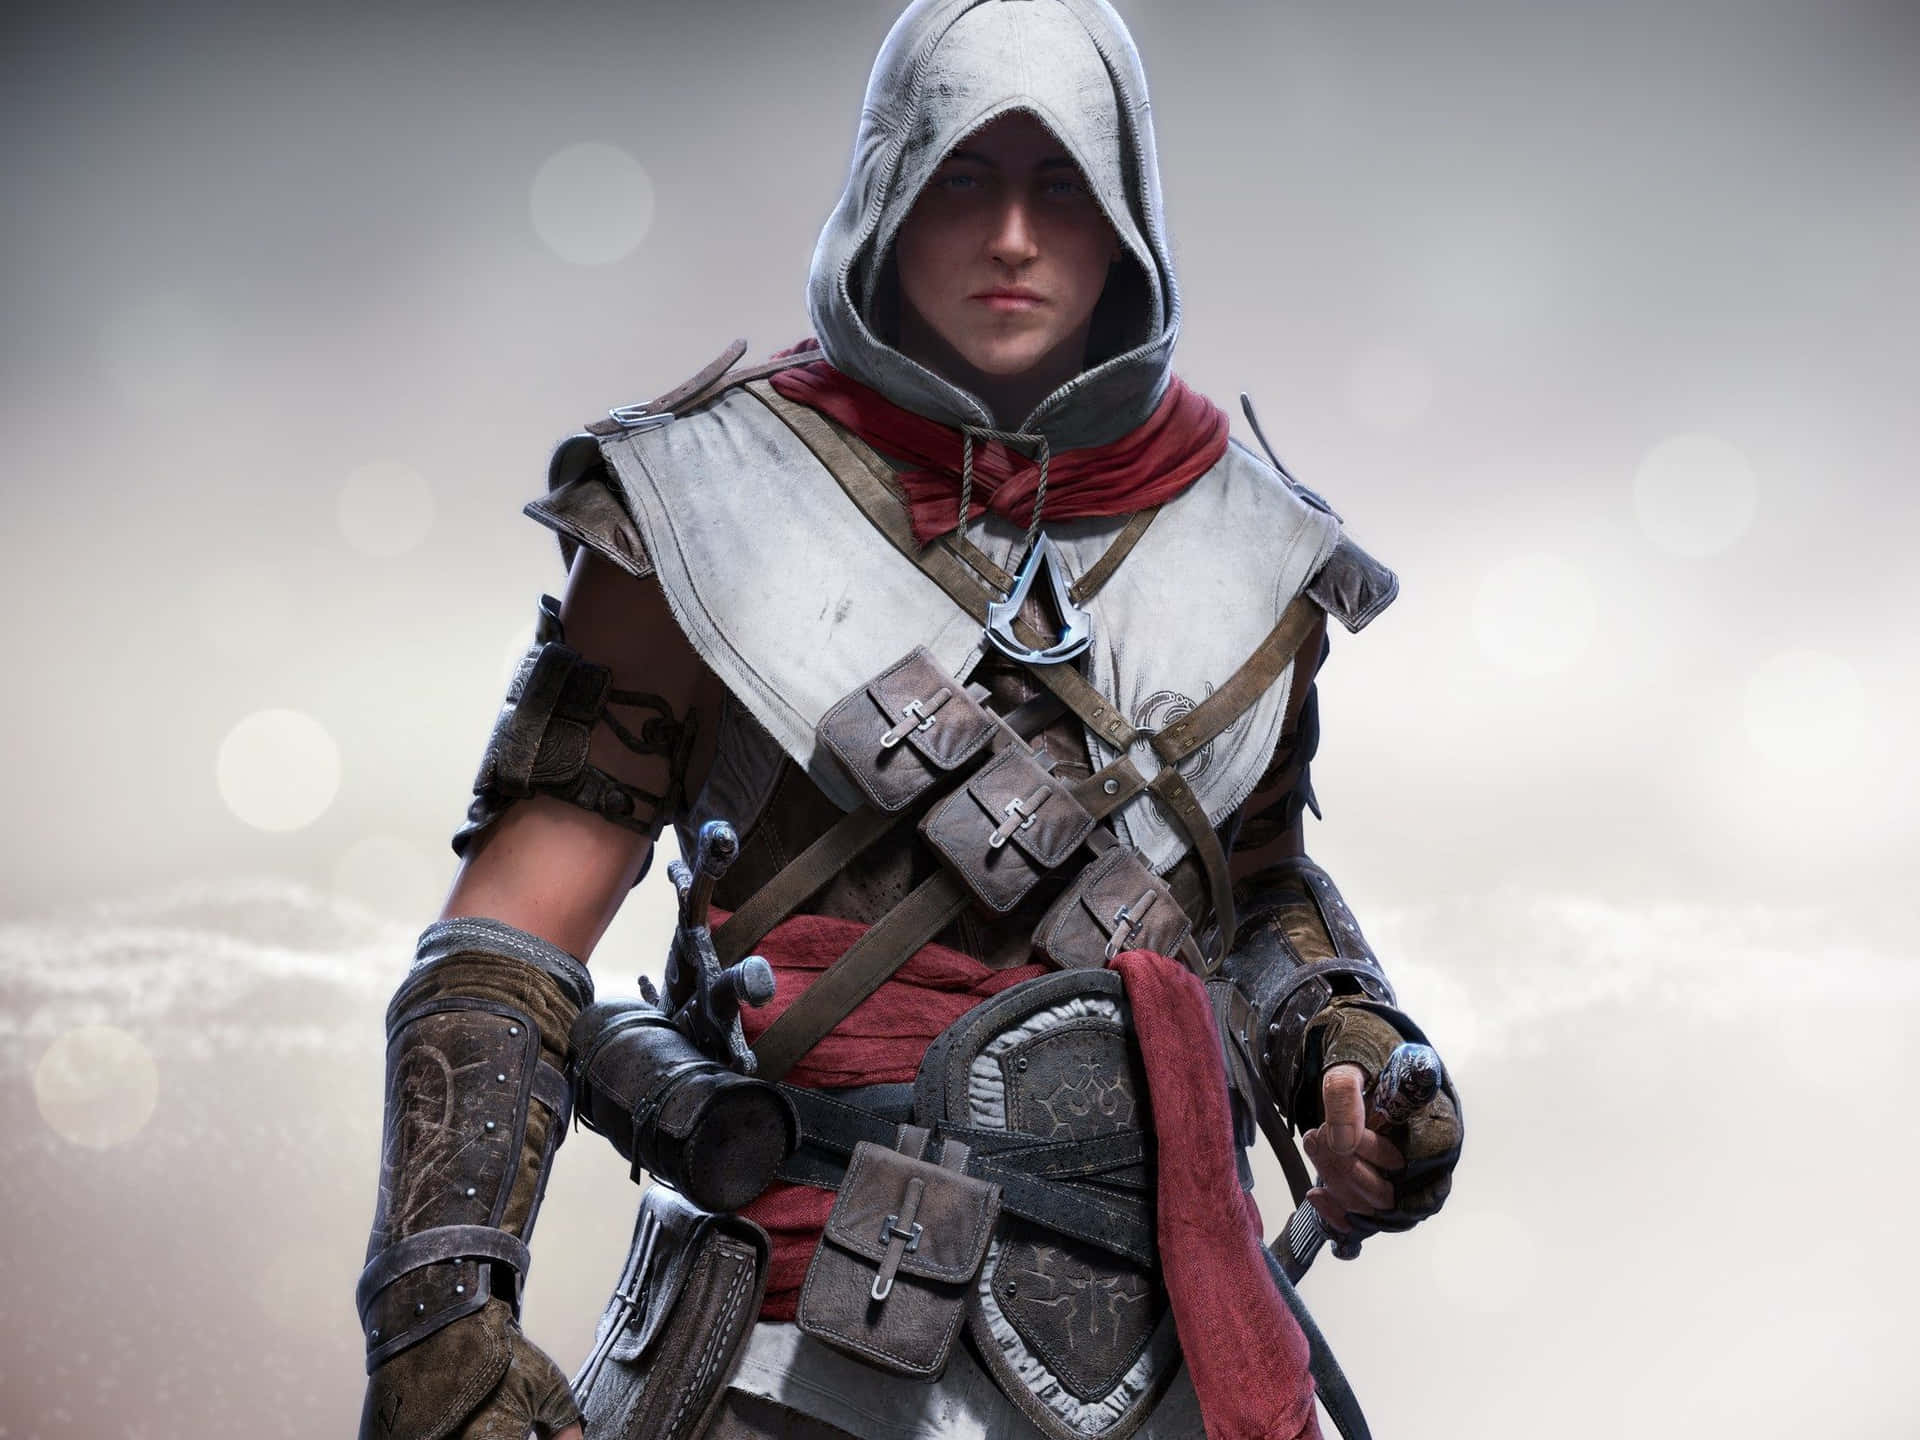 Assassin's Creed Iii - Pc - Pc - Pc - P Wallpaper